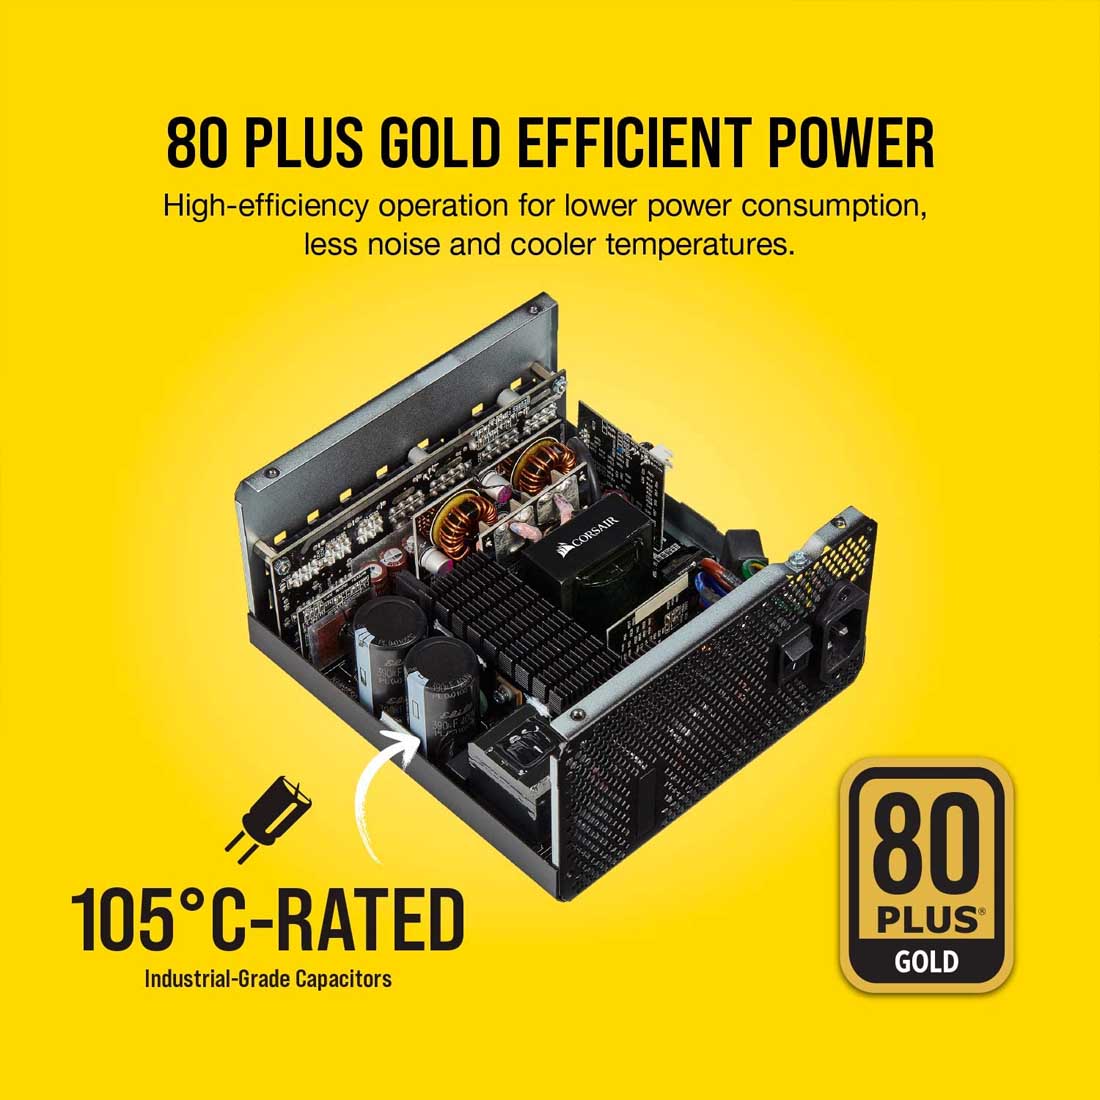 CORSAIR RM 650W Full Modular 80 Plus Gold SMPS Power Supply